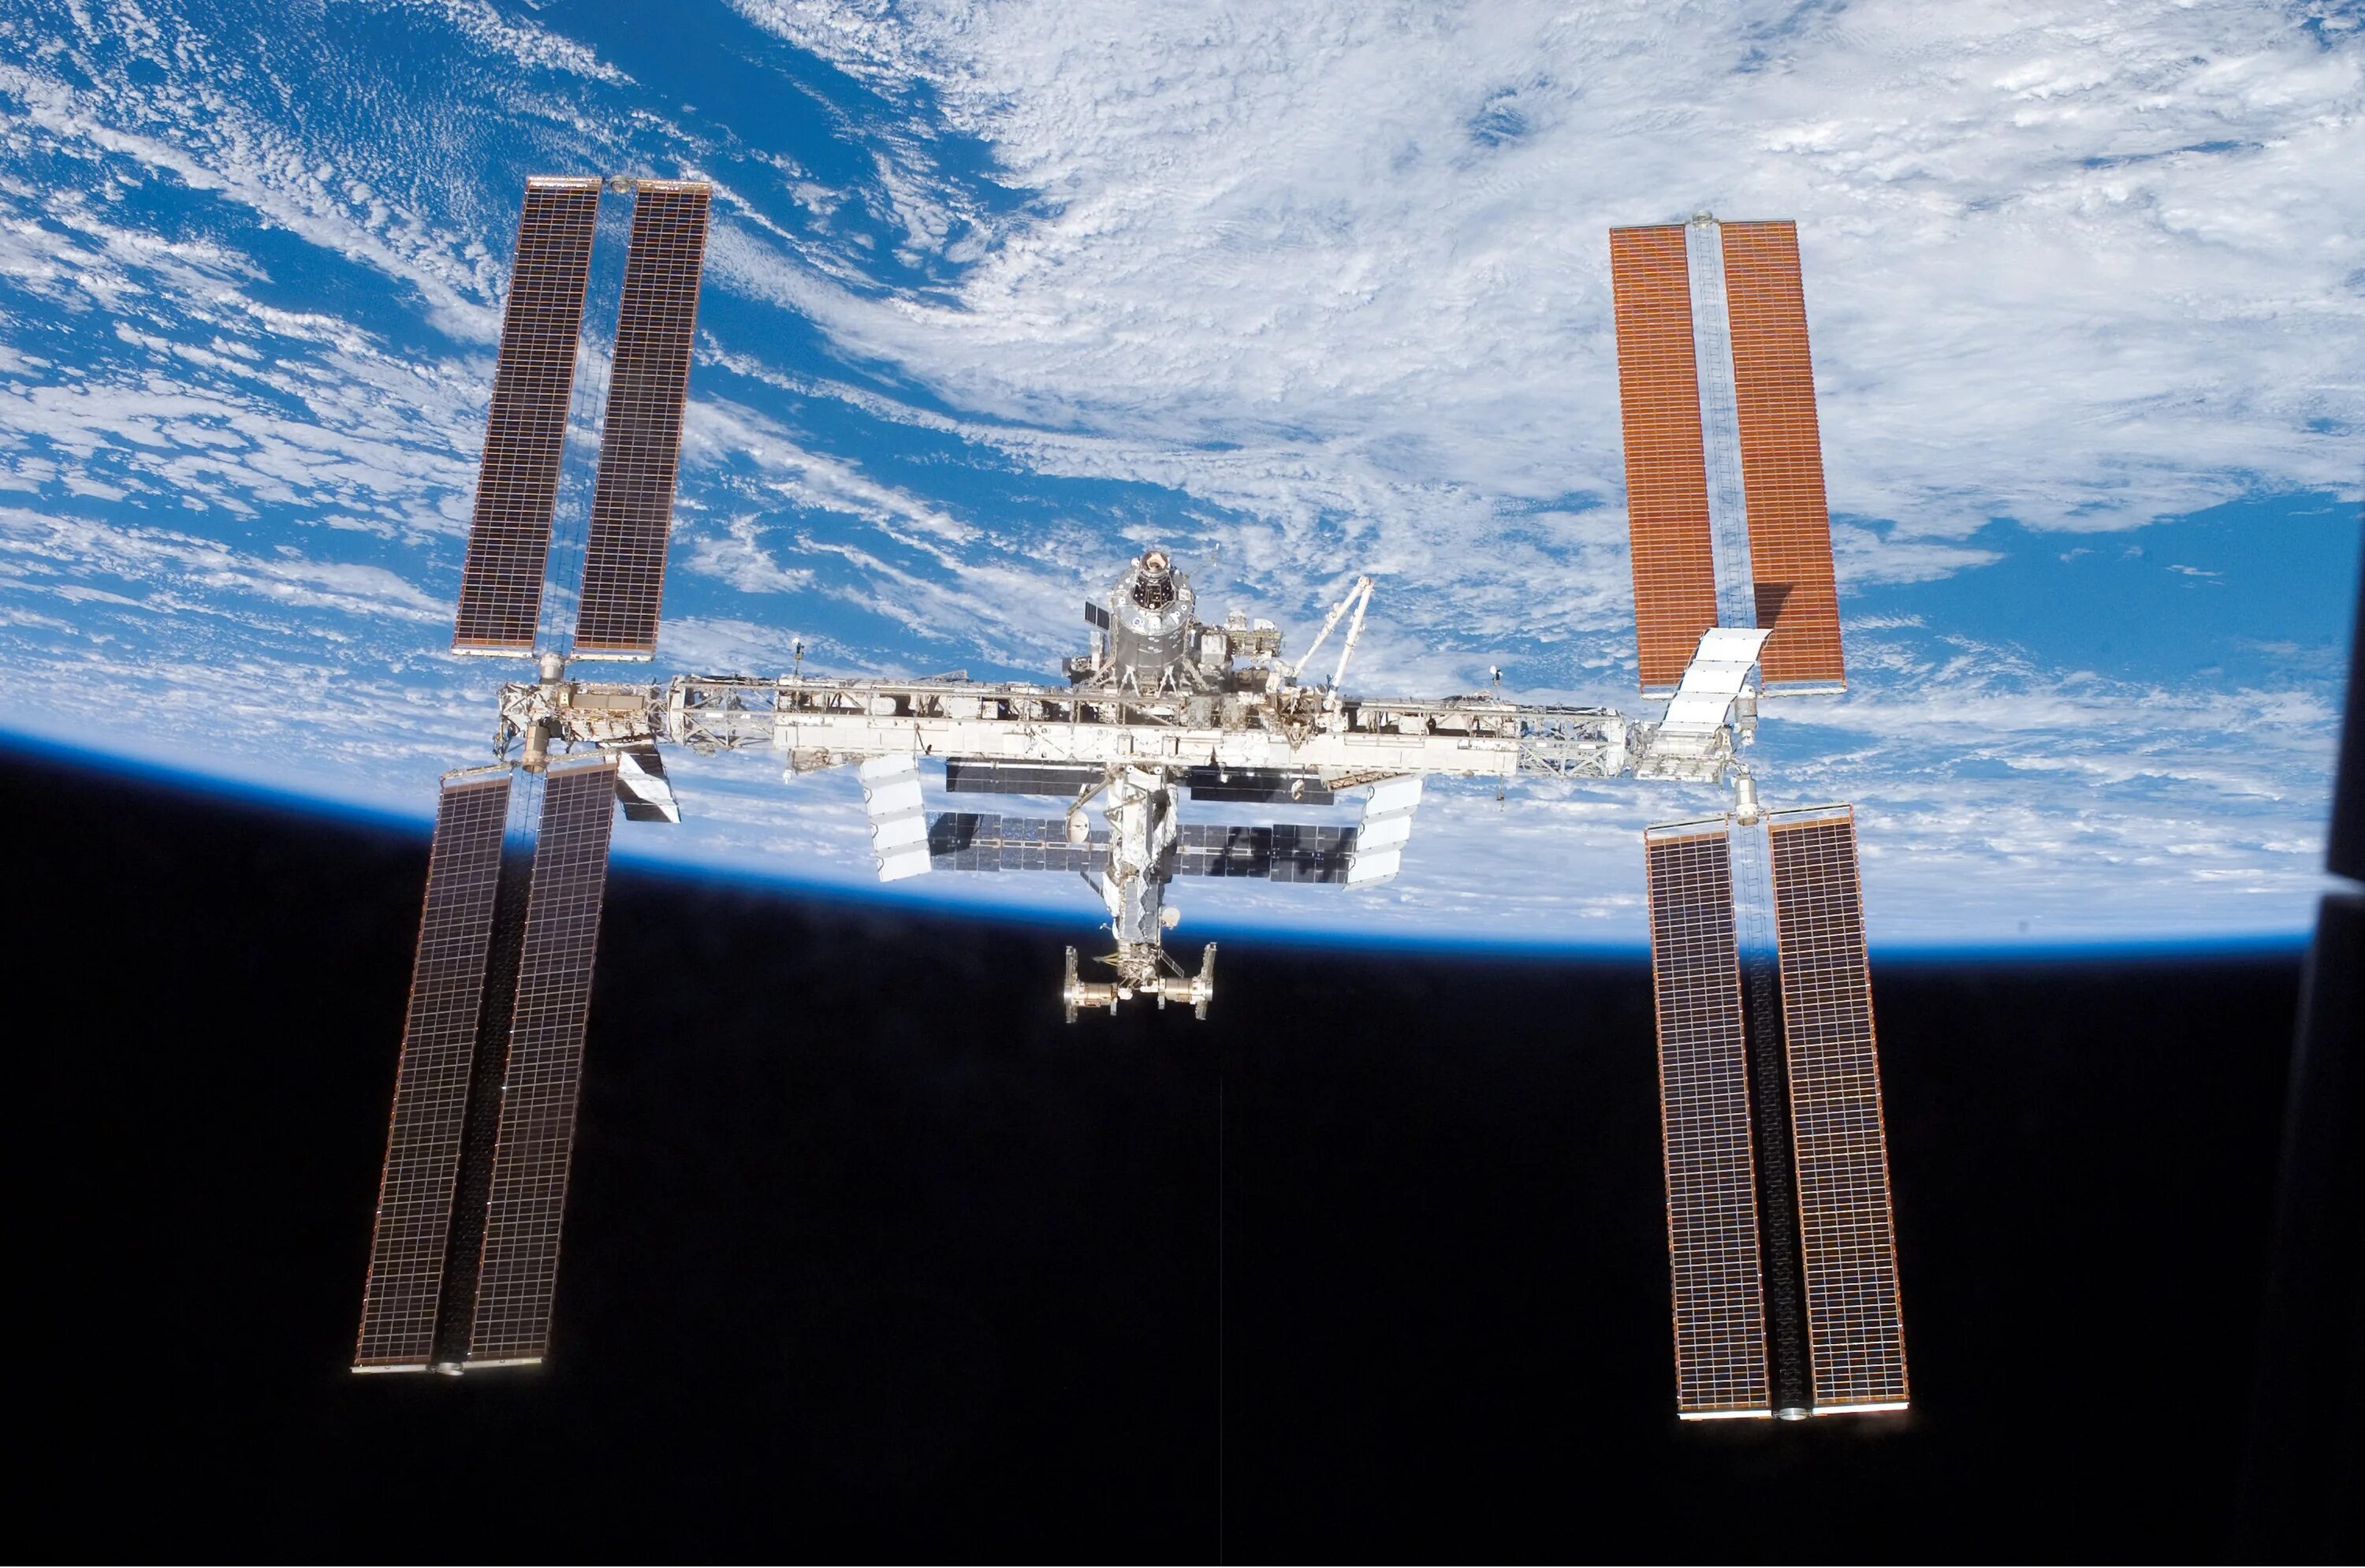 Международная Космическая станция МКС. ISS Космическая станция. Станция МКС В космосе. МКС 2007 год.